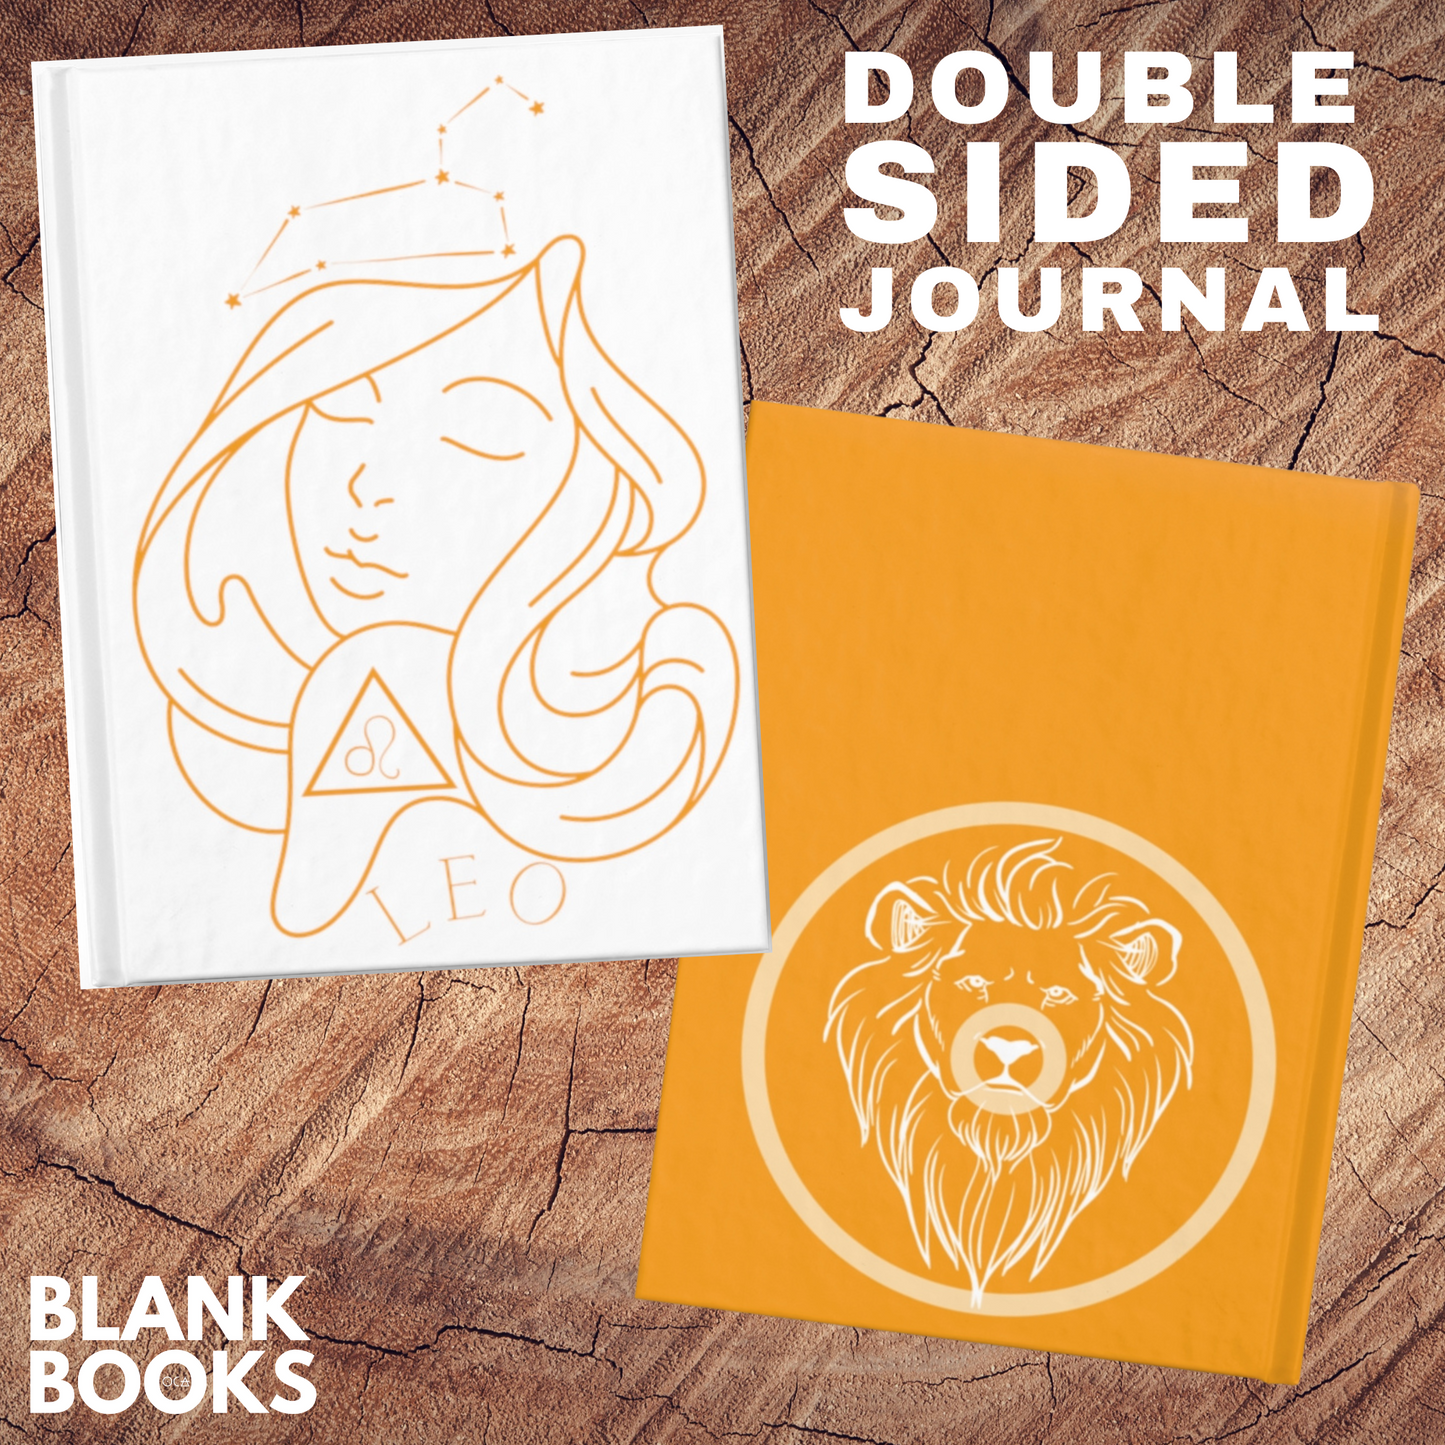 Leo/Sun Journal (Doublesided Design Blank Book)